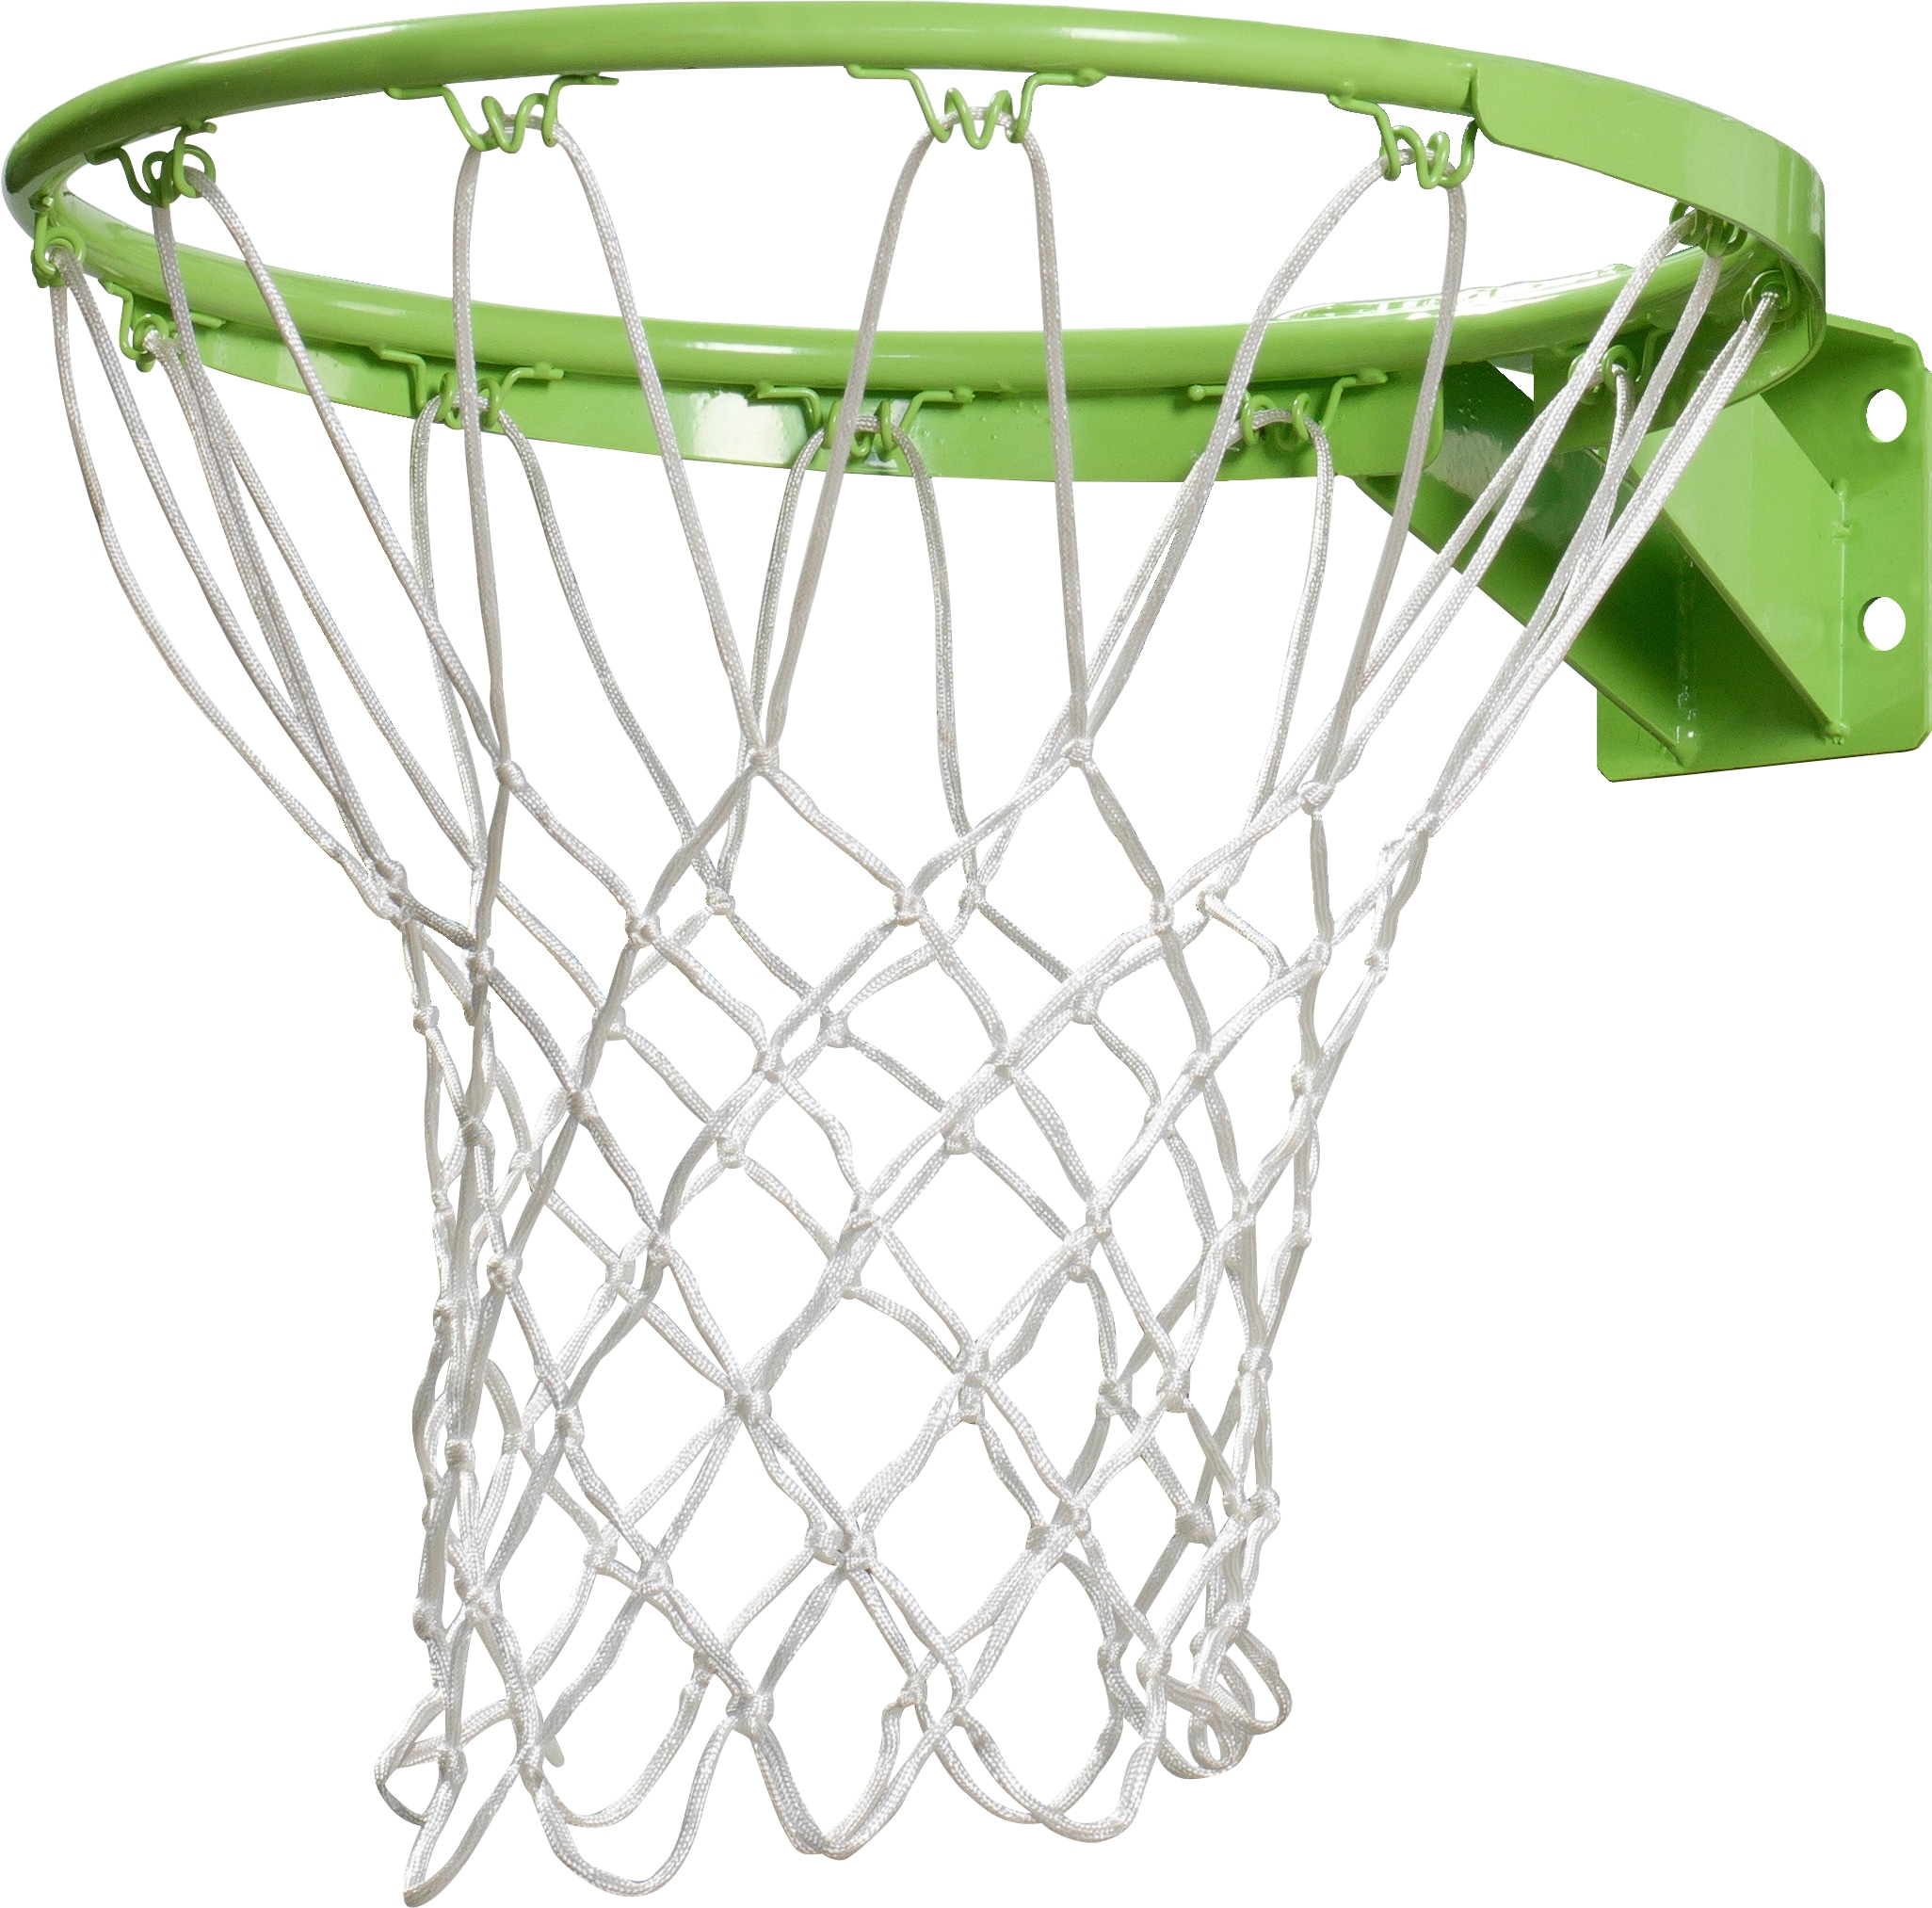 EXIT Basketballkorb »Galaxy«, Ø: 45 cm, Ring mit Netz